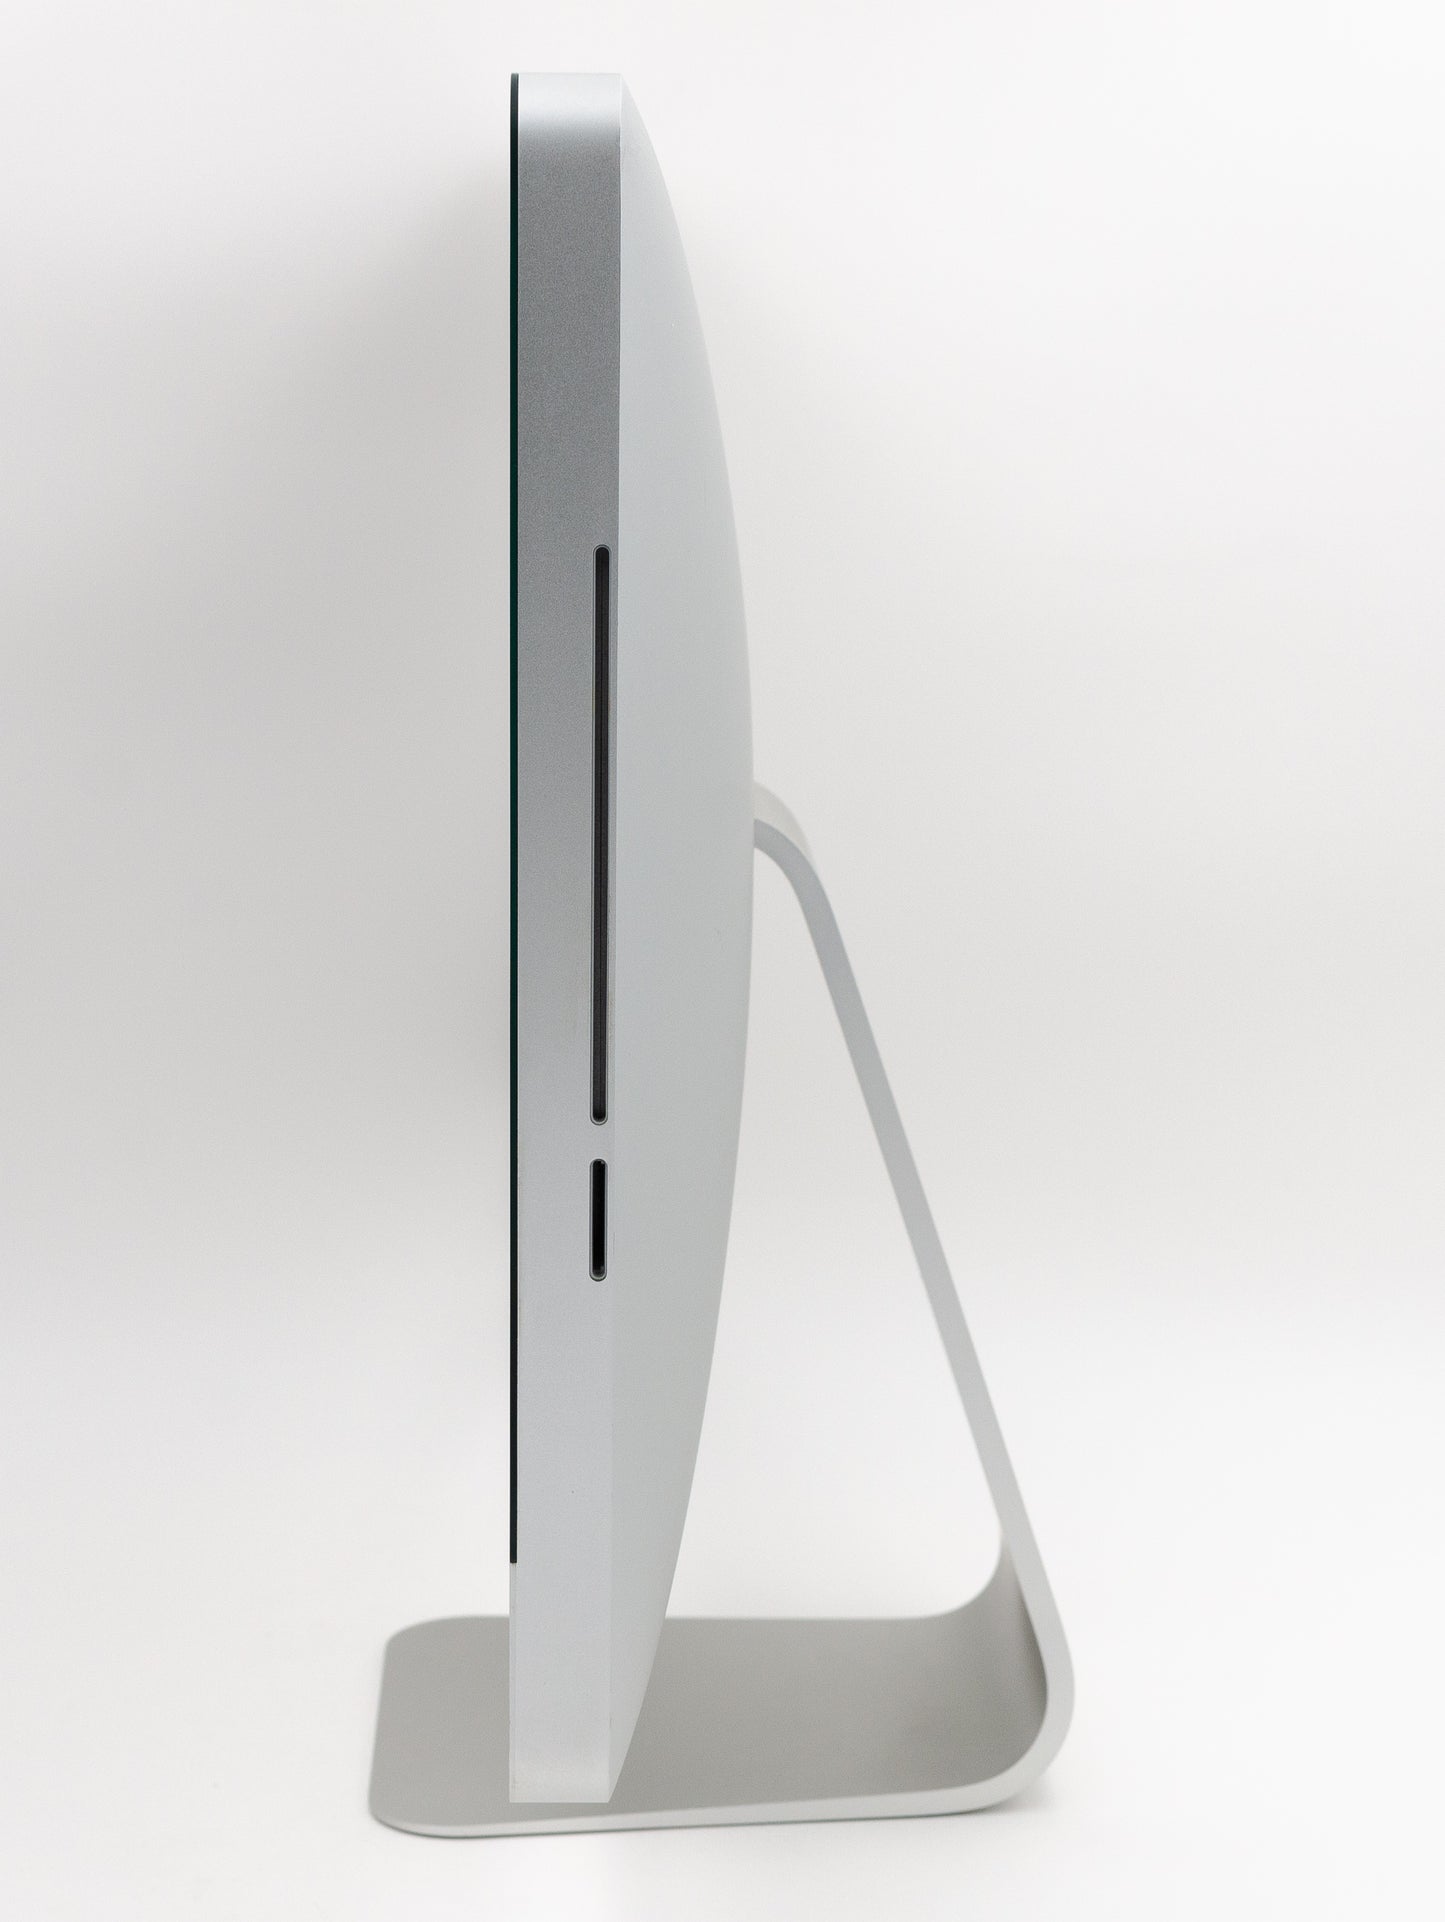 apple-mid-2010-21.5-inch-imac-a1311-aluminum-dci3 - 3.06ghz, 4gb ram, hd 5670 - 512mb gpu-3